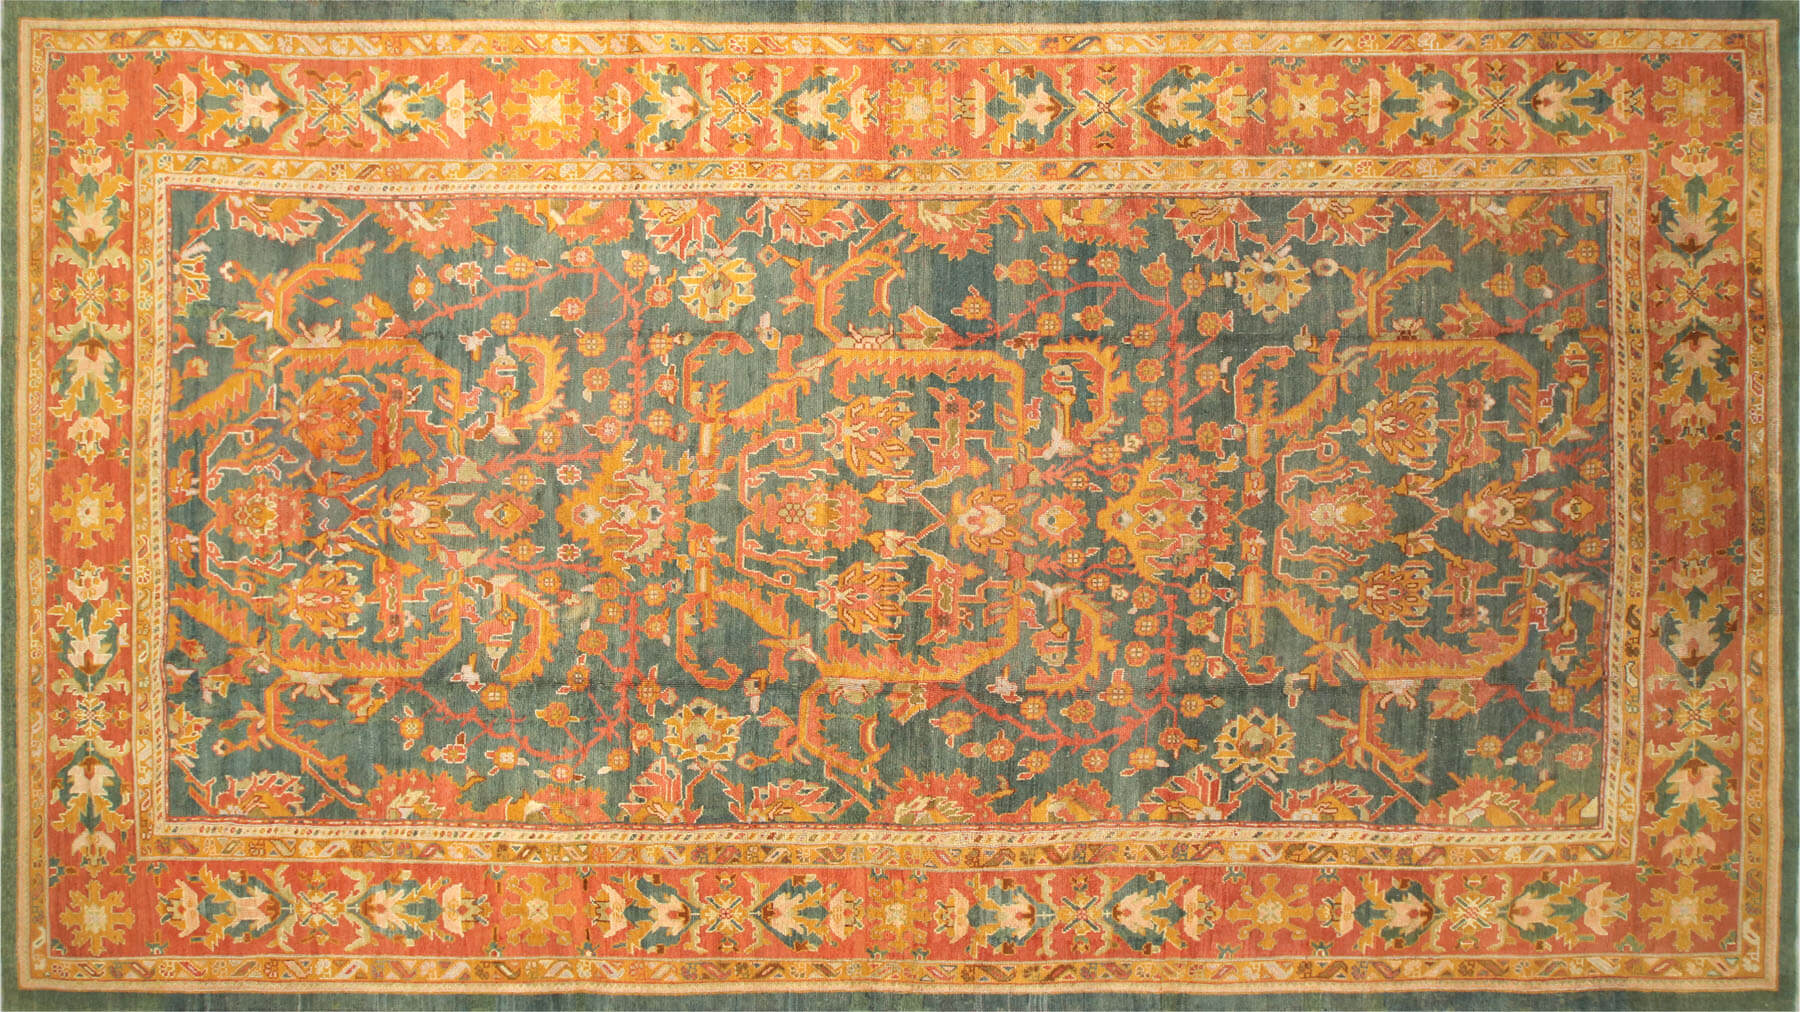 Antique Turkish Oushak Carpet - 12'2" x 22'2"